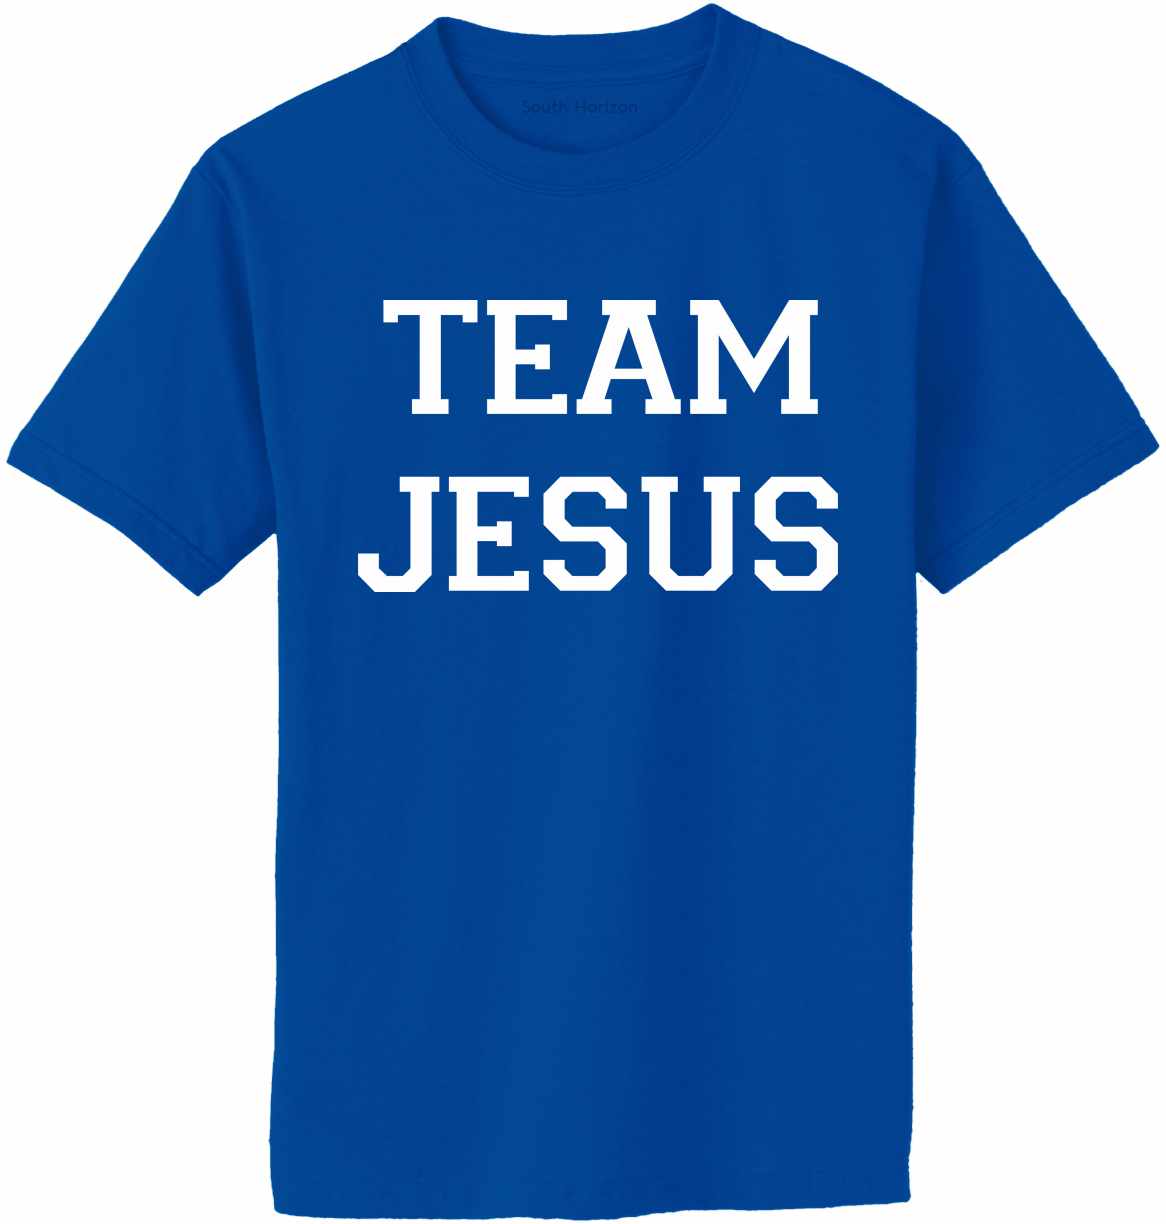 TEAM JESUS Adult T-Shirt